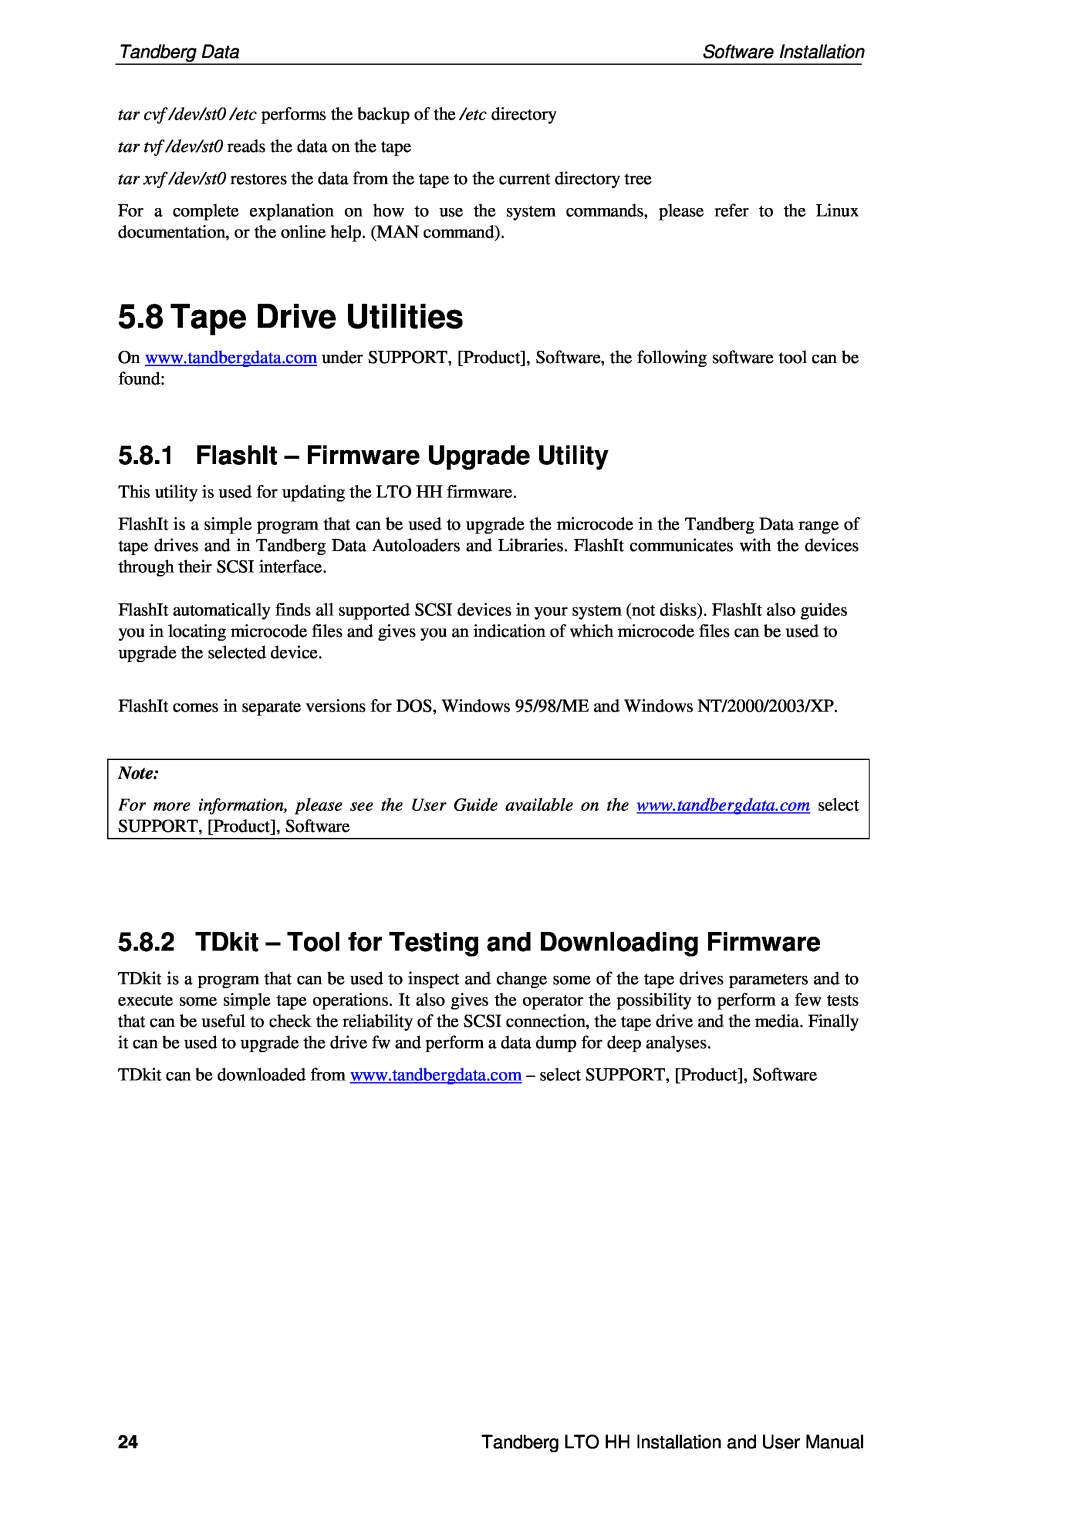 Tandberg Data LTO-2 HH Tape Drive Utilities, FlashIt - Firmware Upgrade Utility, Tandberg Data, Software Installation 